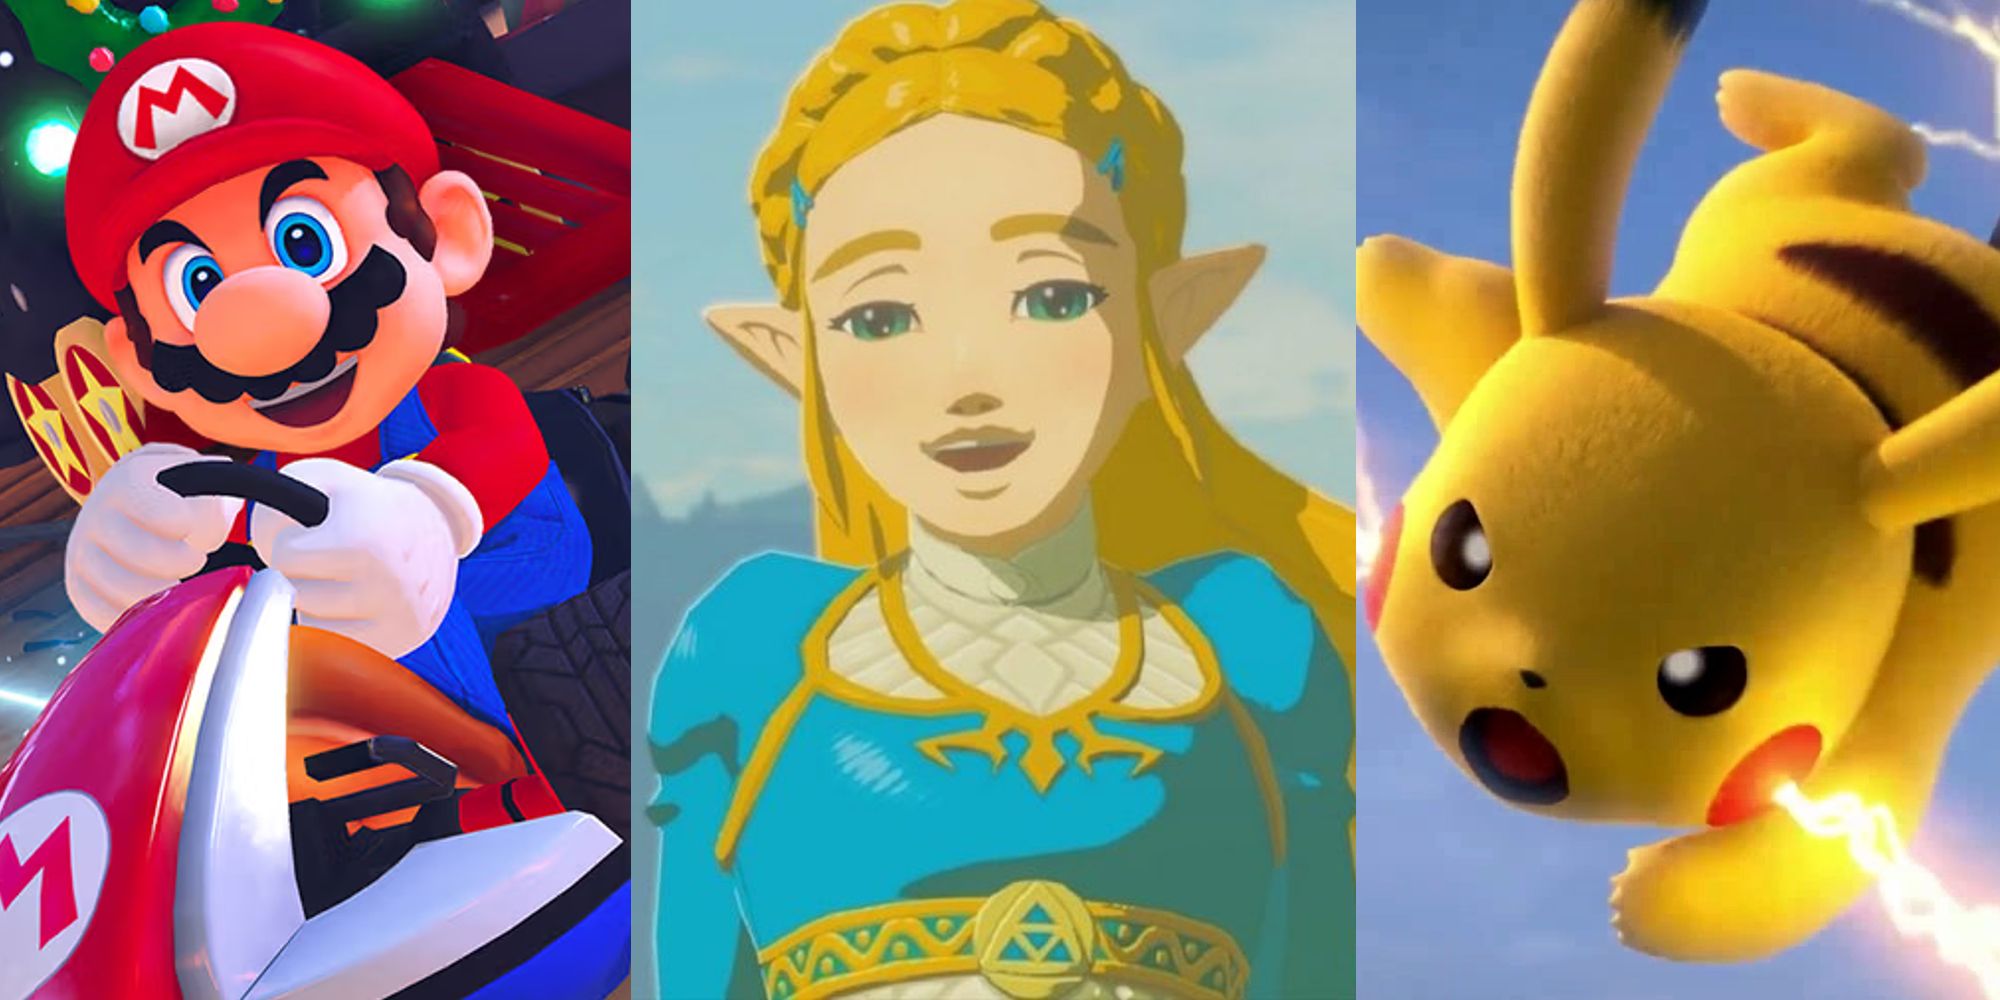 Mario racing in a kart; Princess Zelda smiling; Pikachu attacking in mid-air